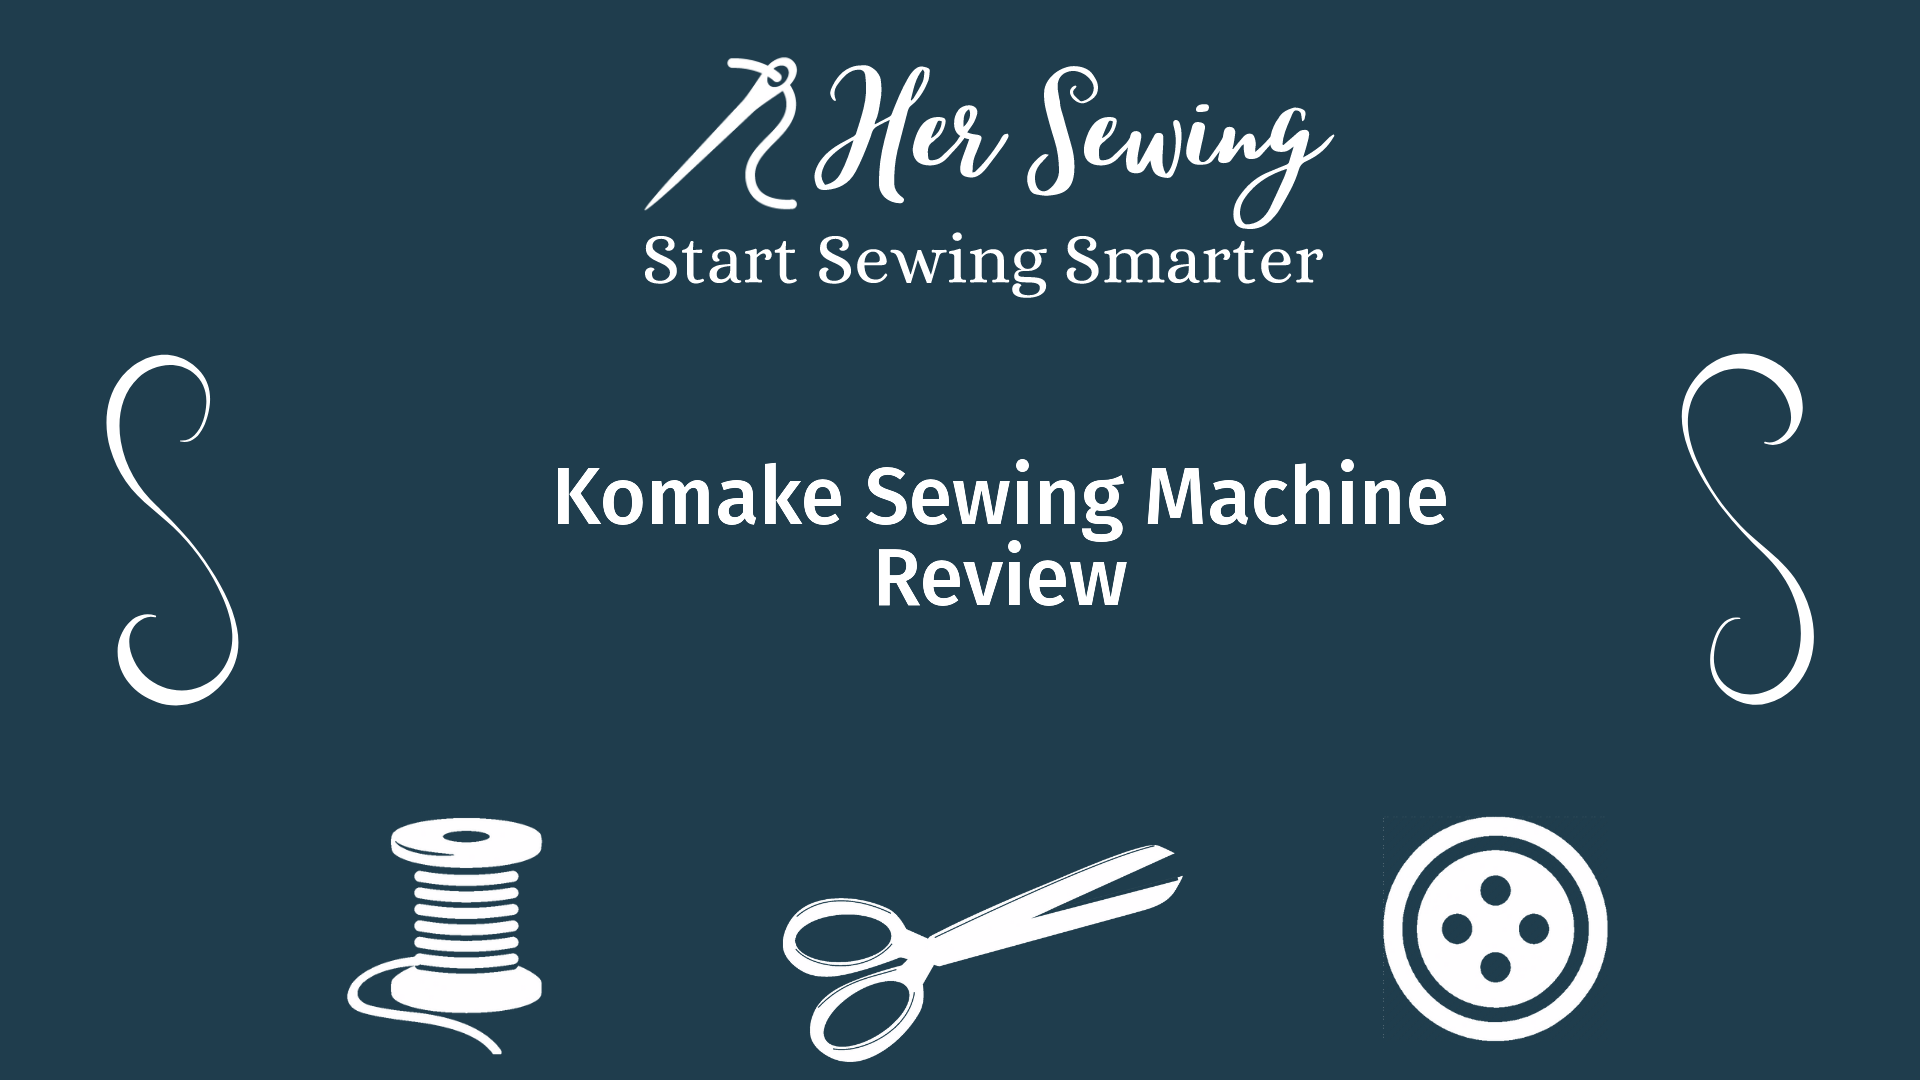 Komake Sewing Machine Review